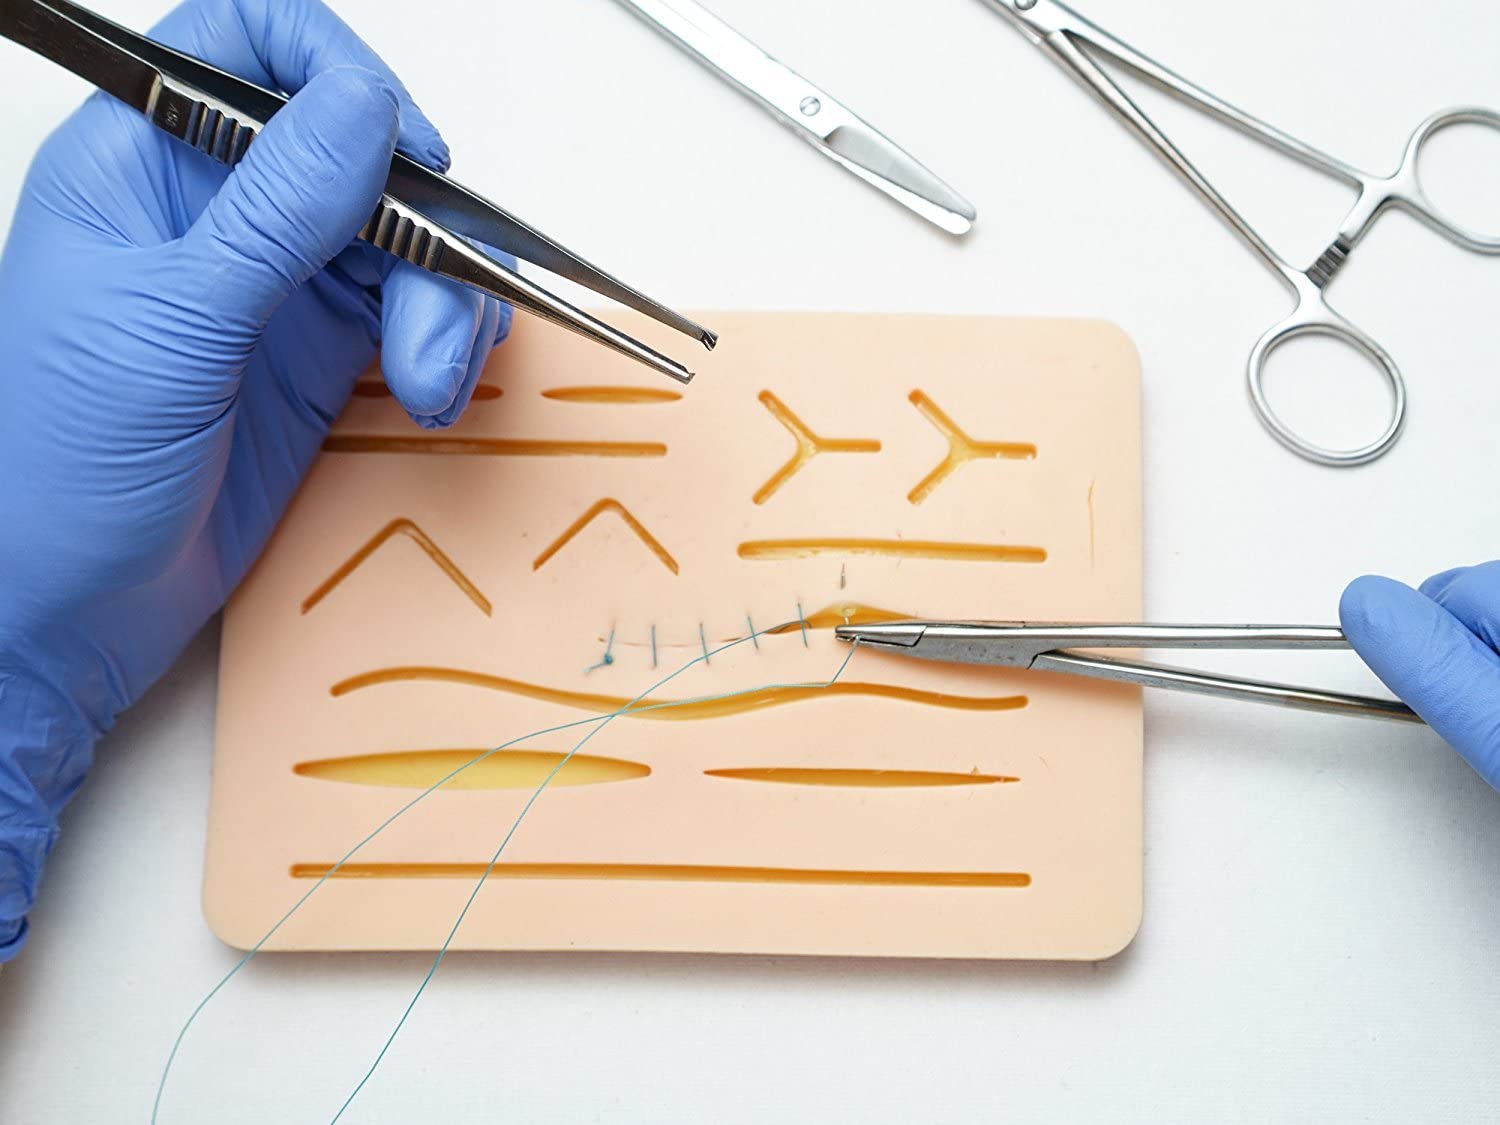 Kit de sutura Medskills® – MEDSKILLS